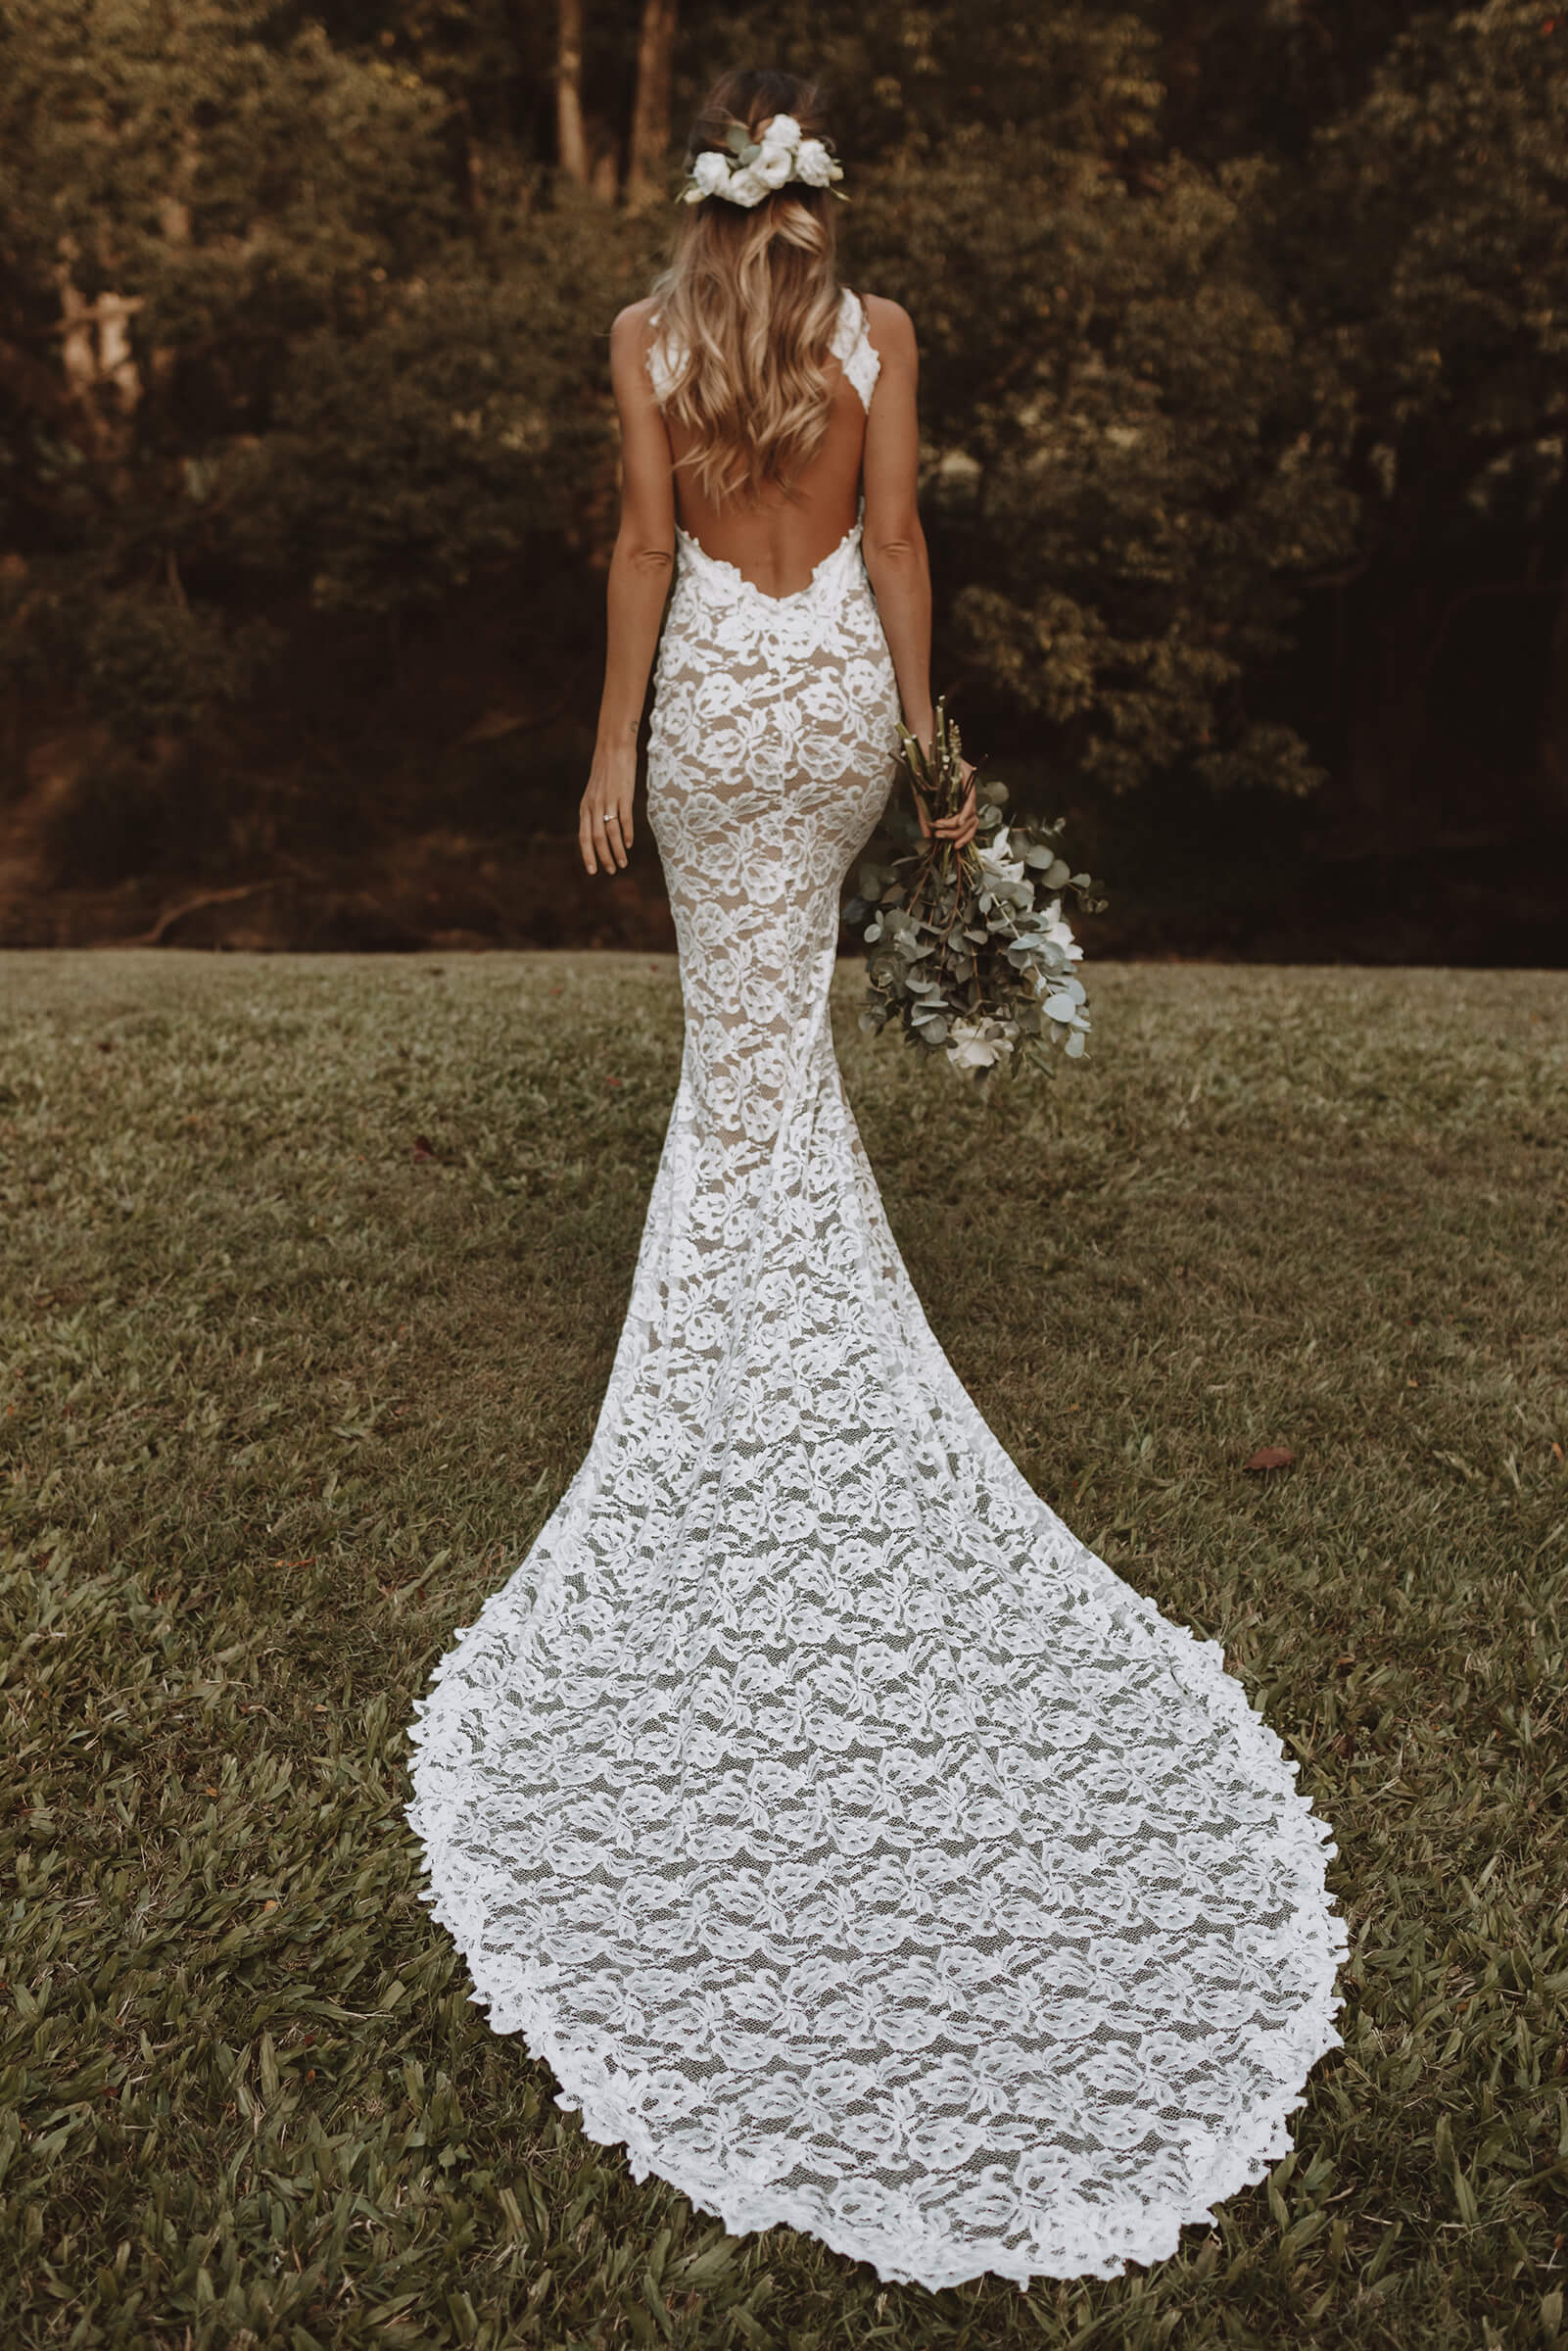 The Best Bridal Shapewear for Any Wedding Dress Style